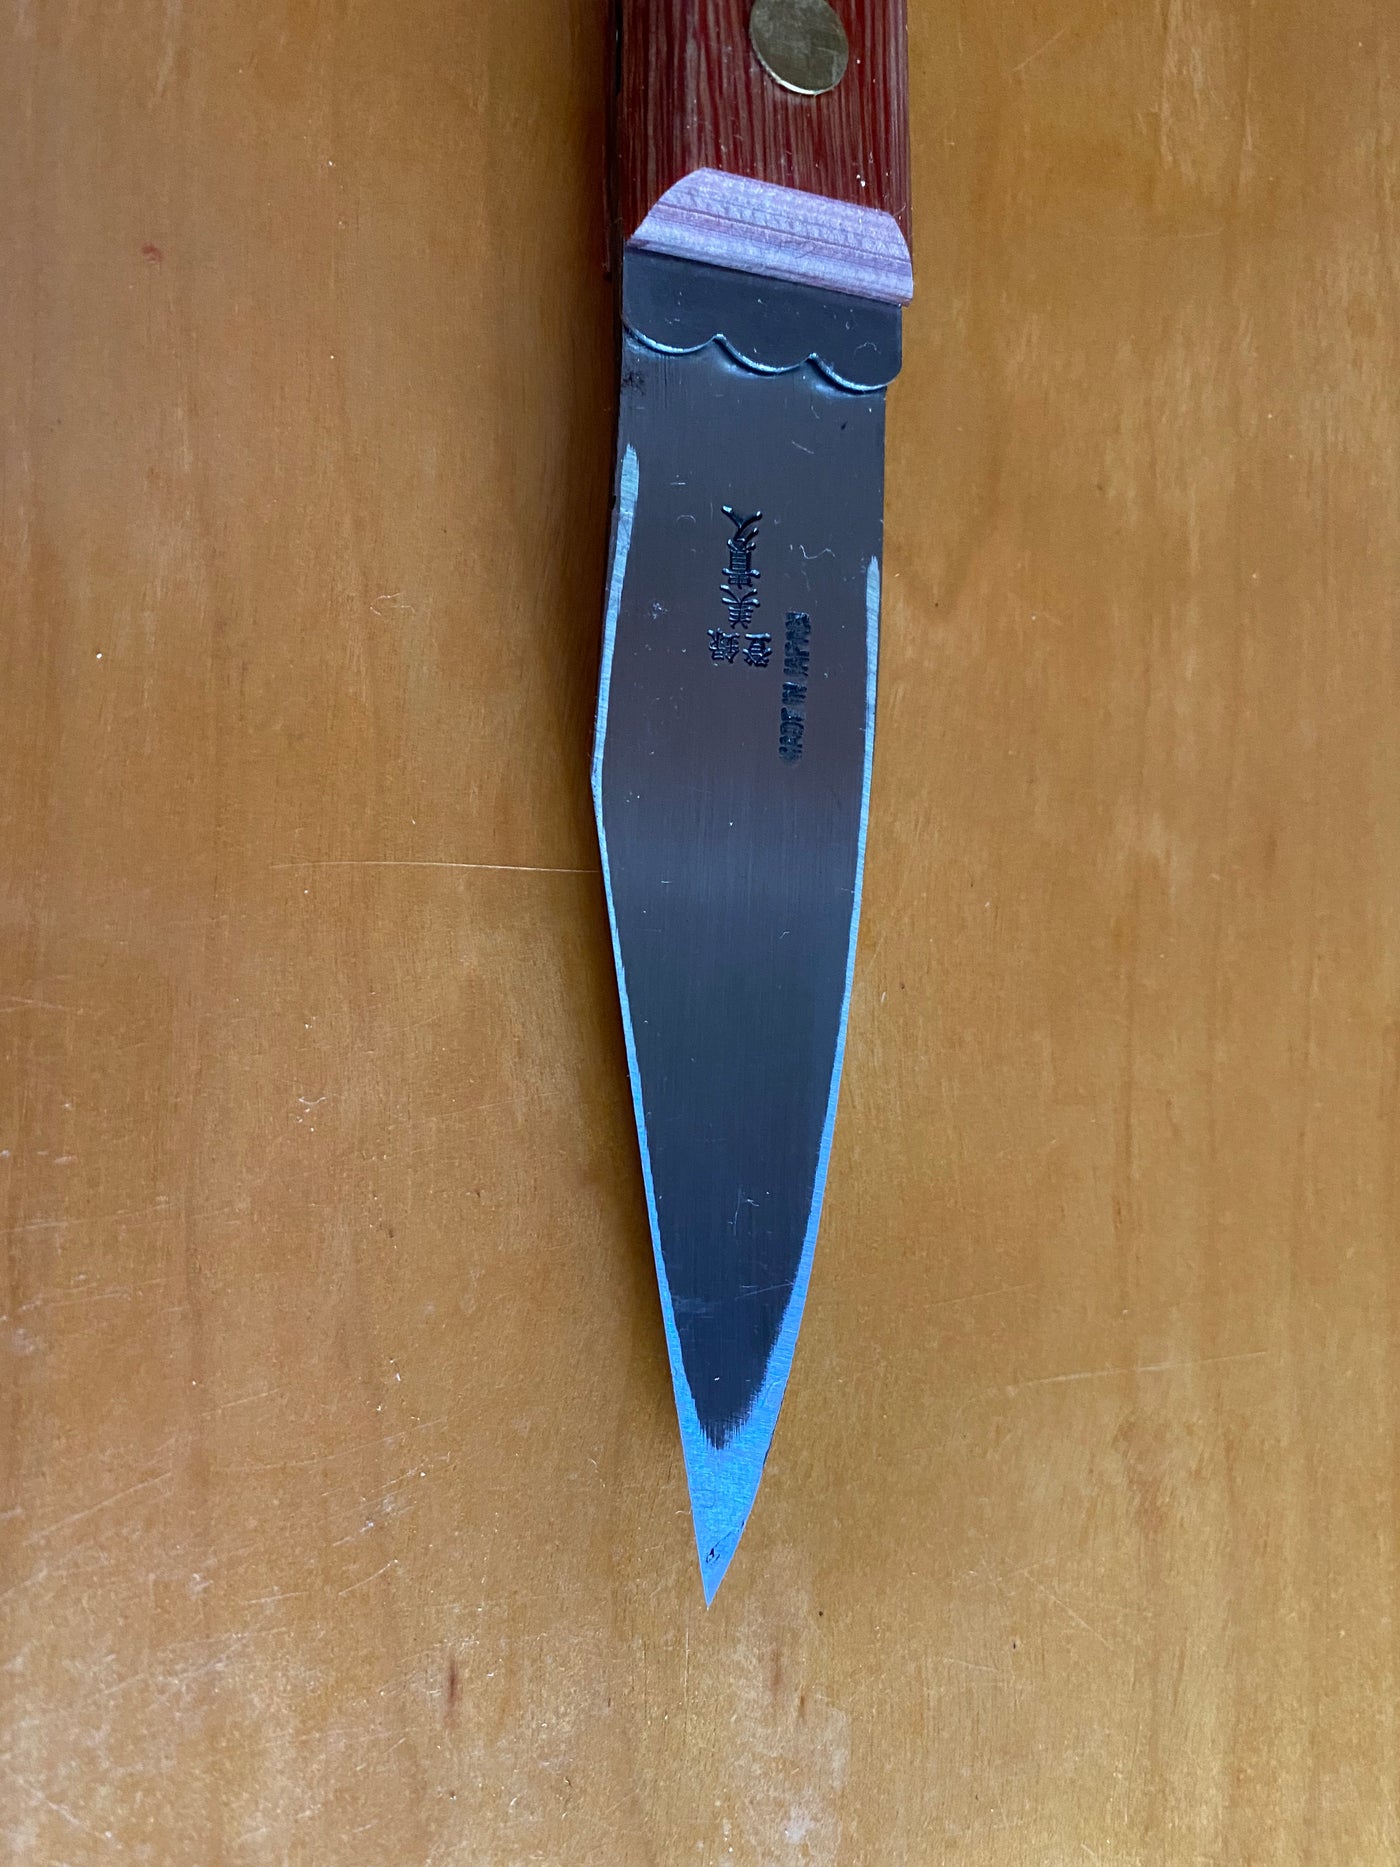 Double Bevel Marking Knife - 5-1/4 Length